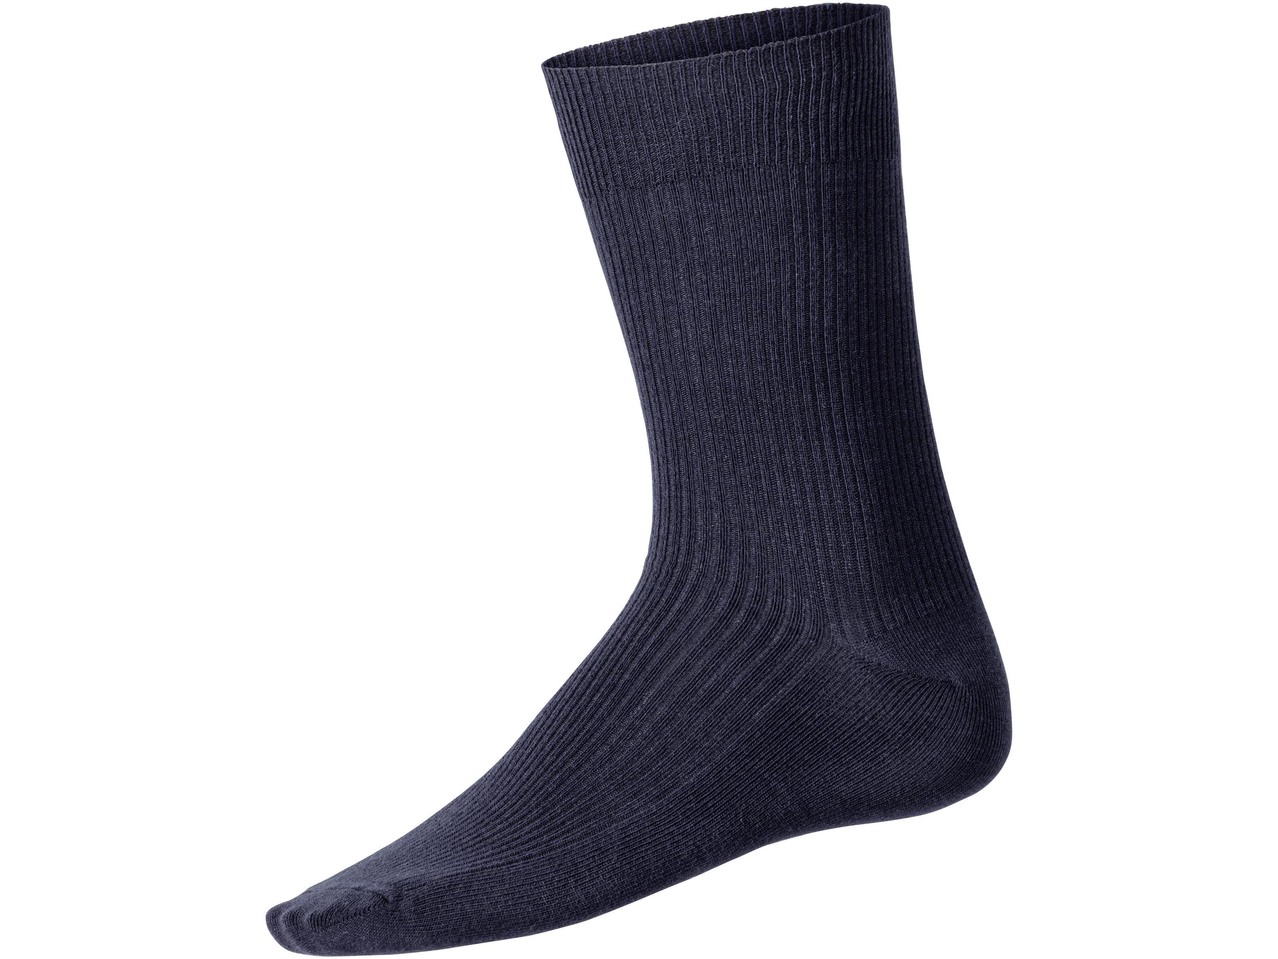 Men's Socks, 3 pairs